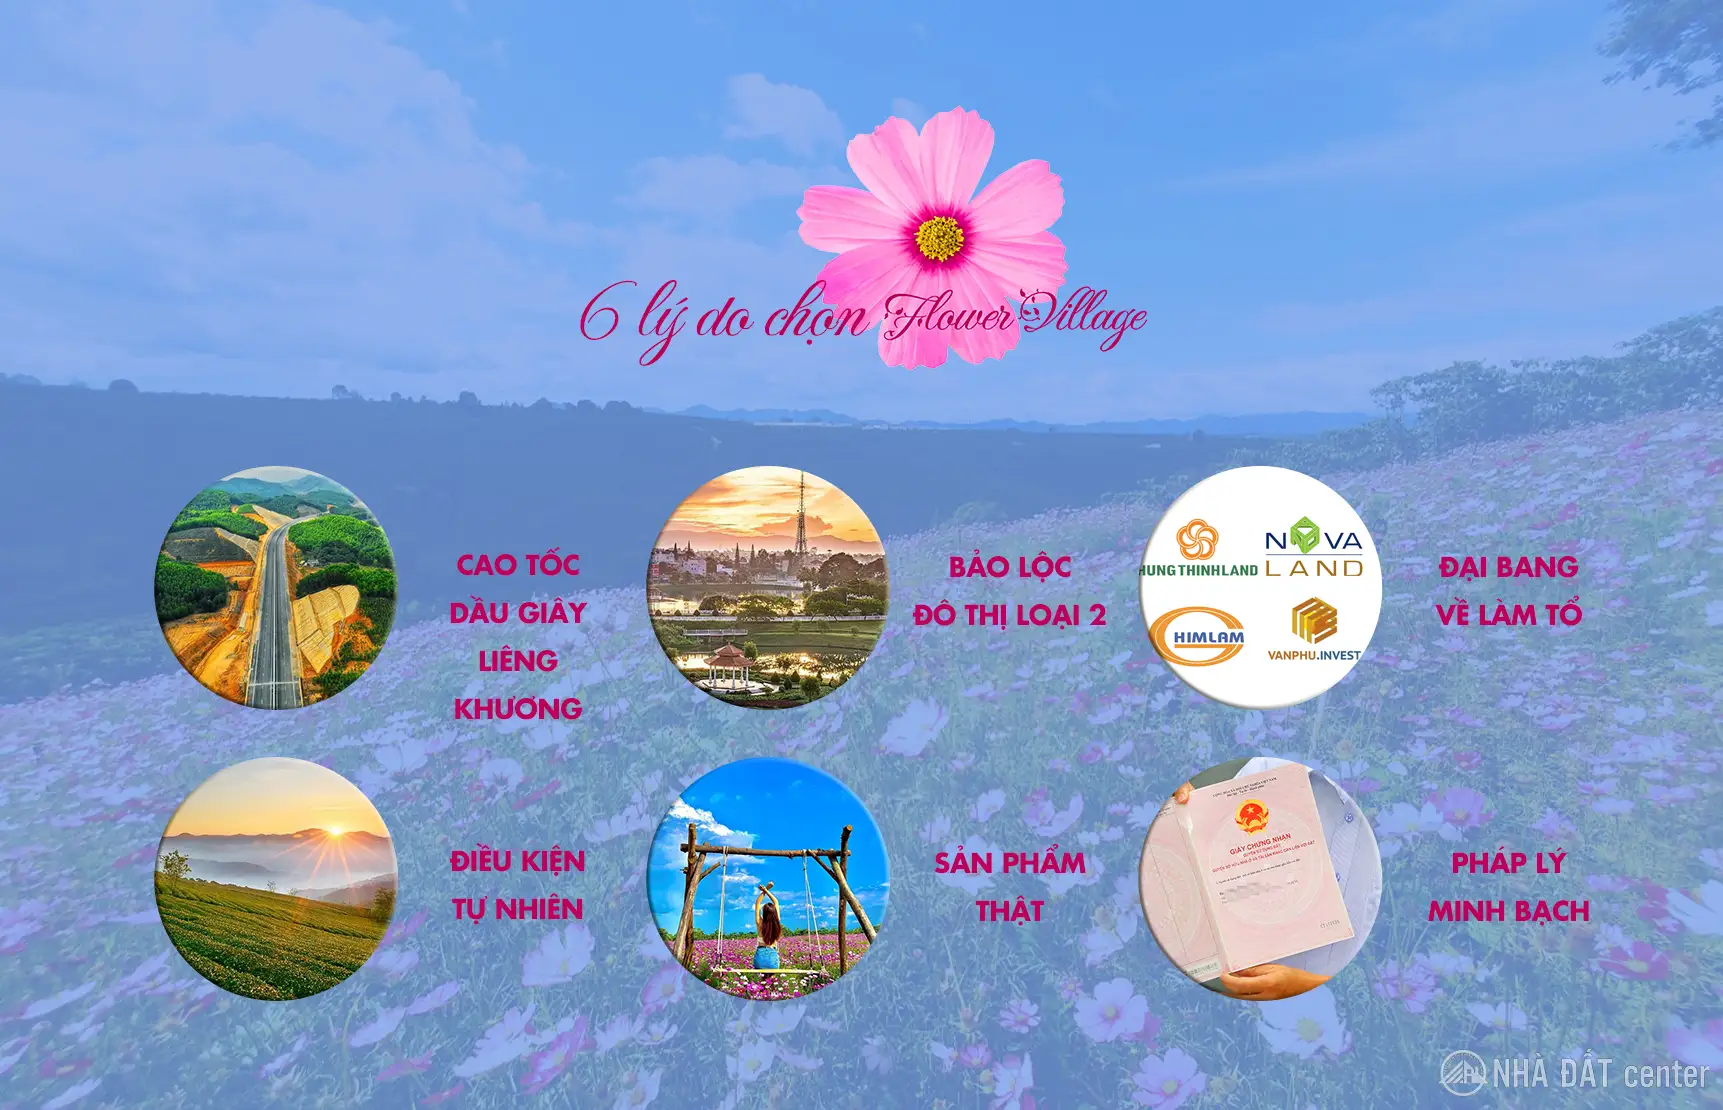 6 Ly Do Chon Lang Hoa Flower Village Bao Loc nhadatcentercom